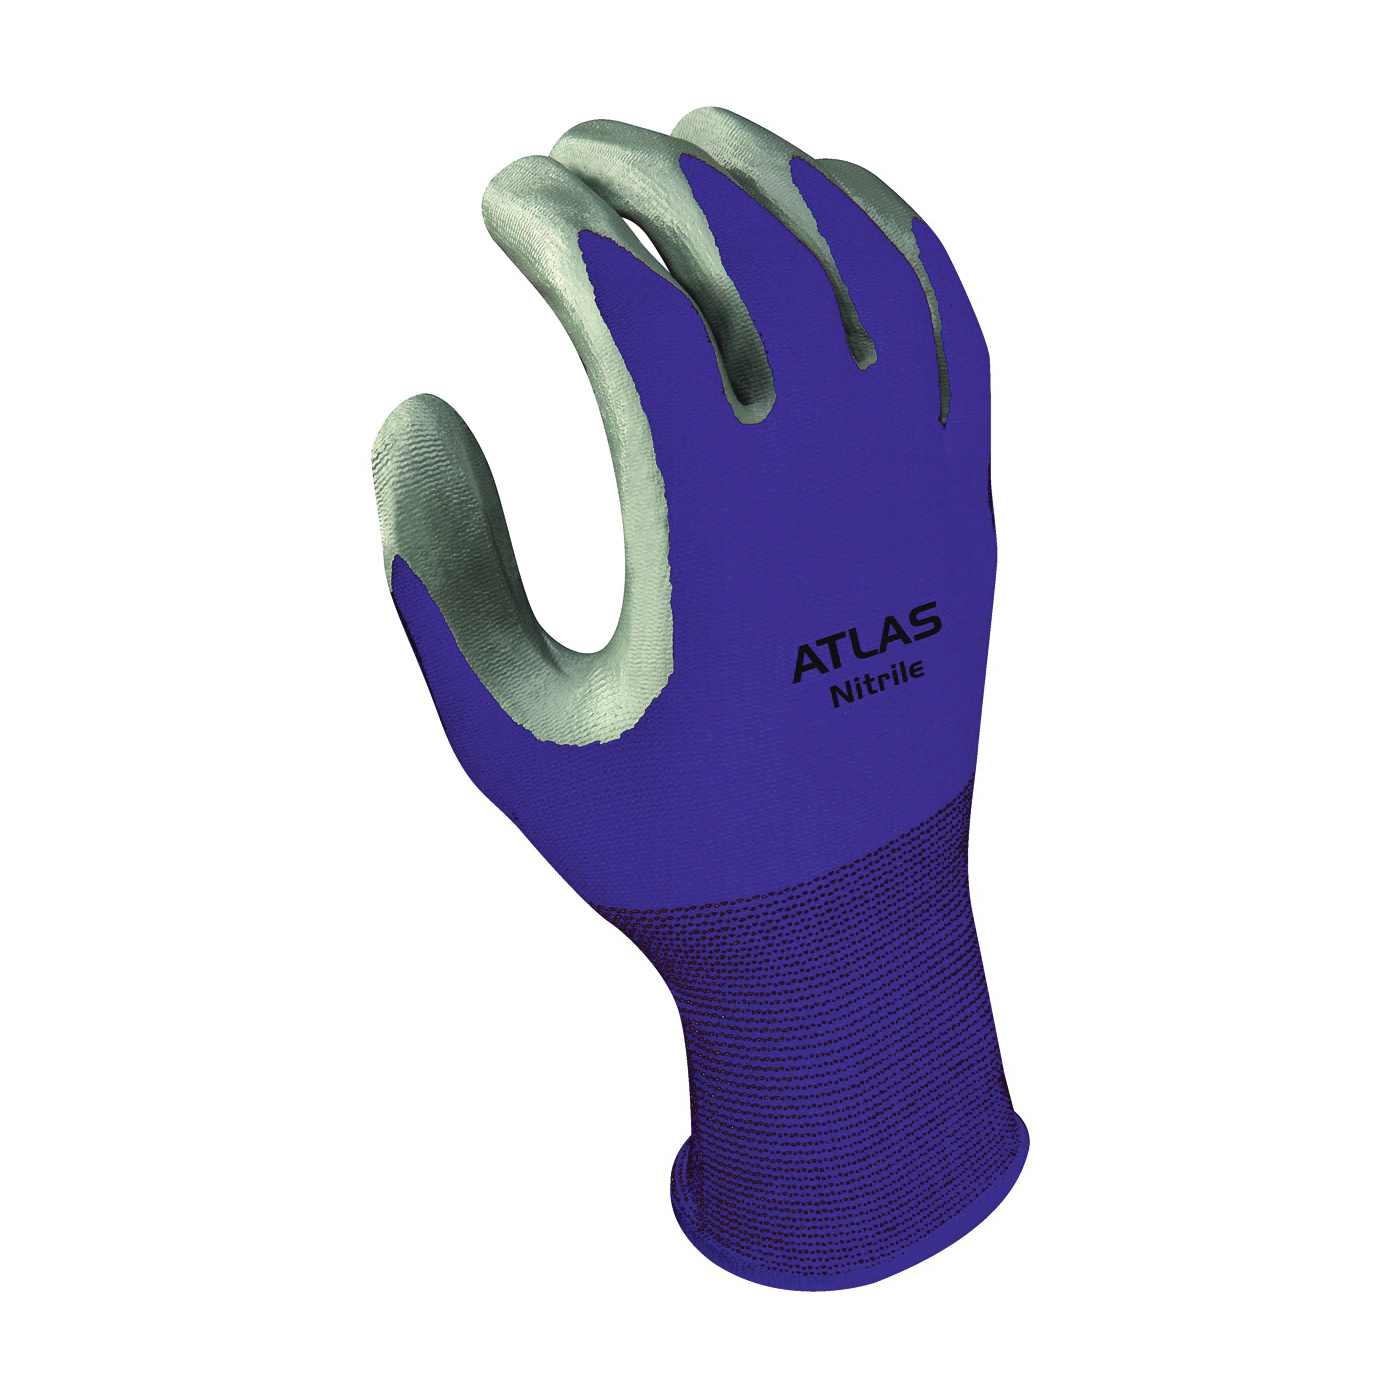 370PLXS-05.RT Ergonomic Protective Gloves, XS, Knit Wrist Cuff